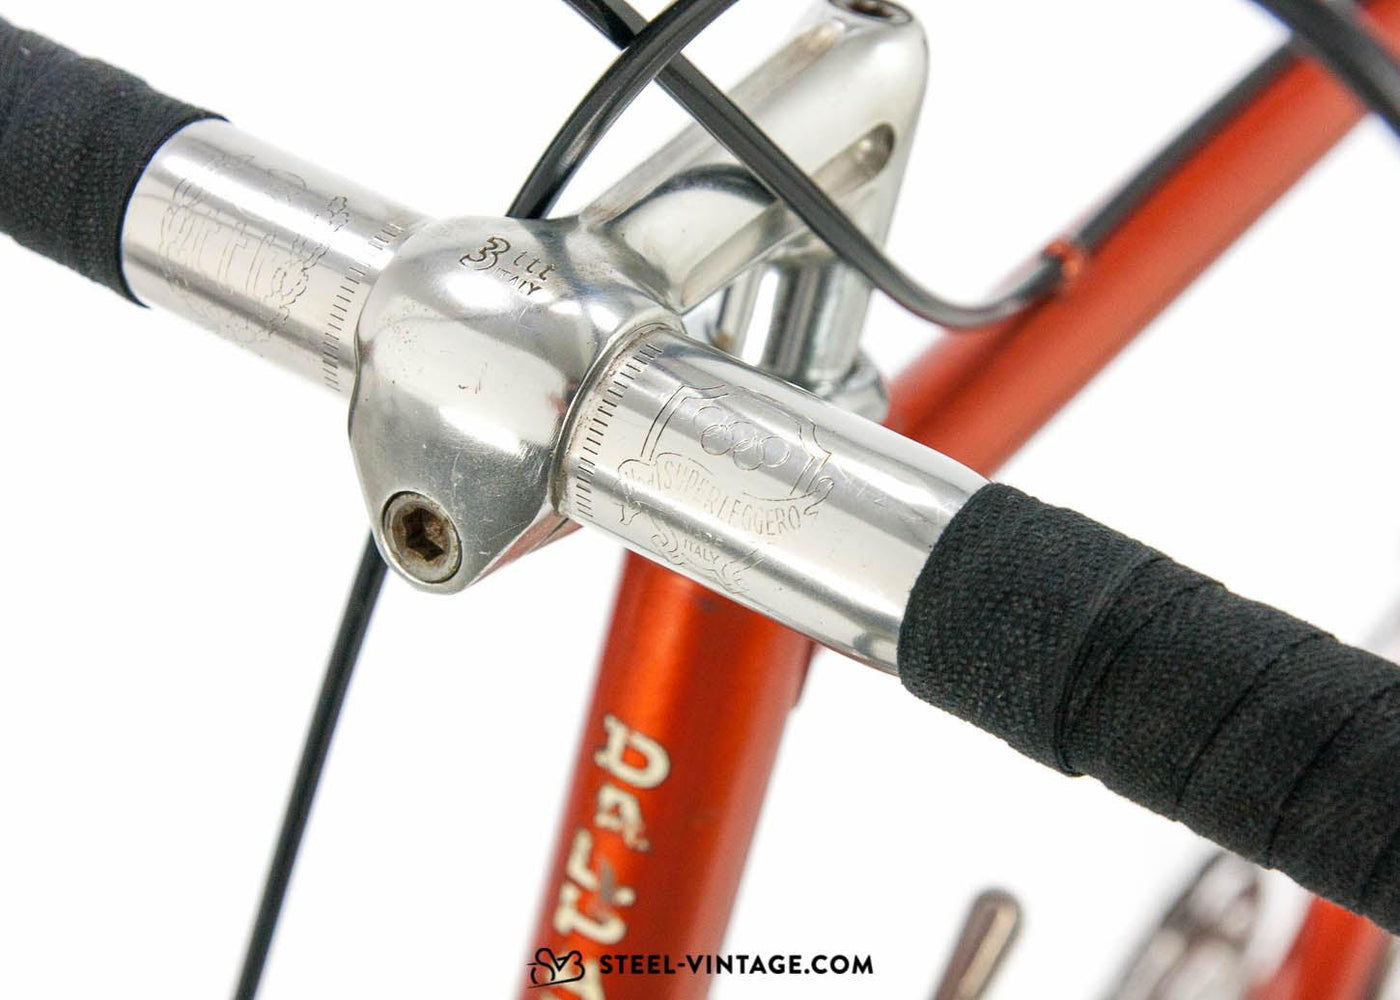 Dalpasso Special Eroica Road Bicycle 1970s - Steel Vintage Bikes